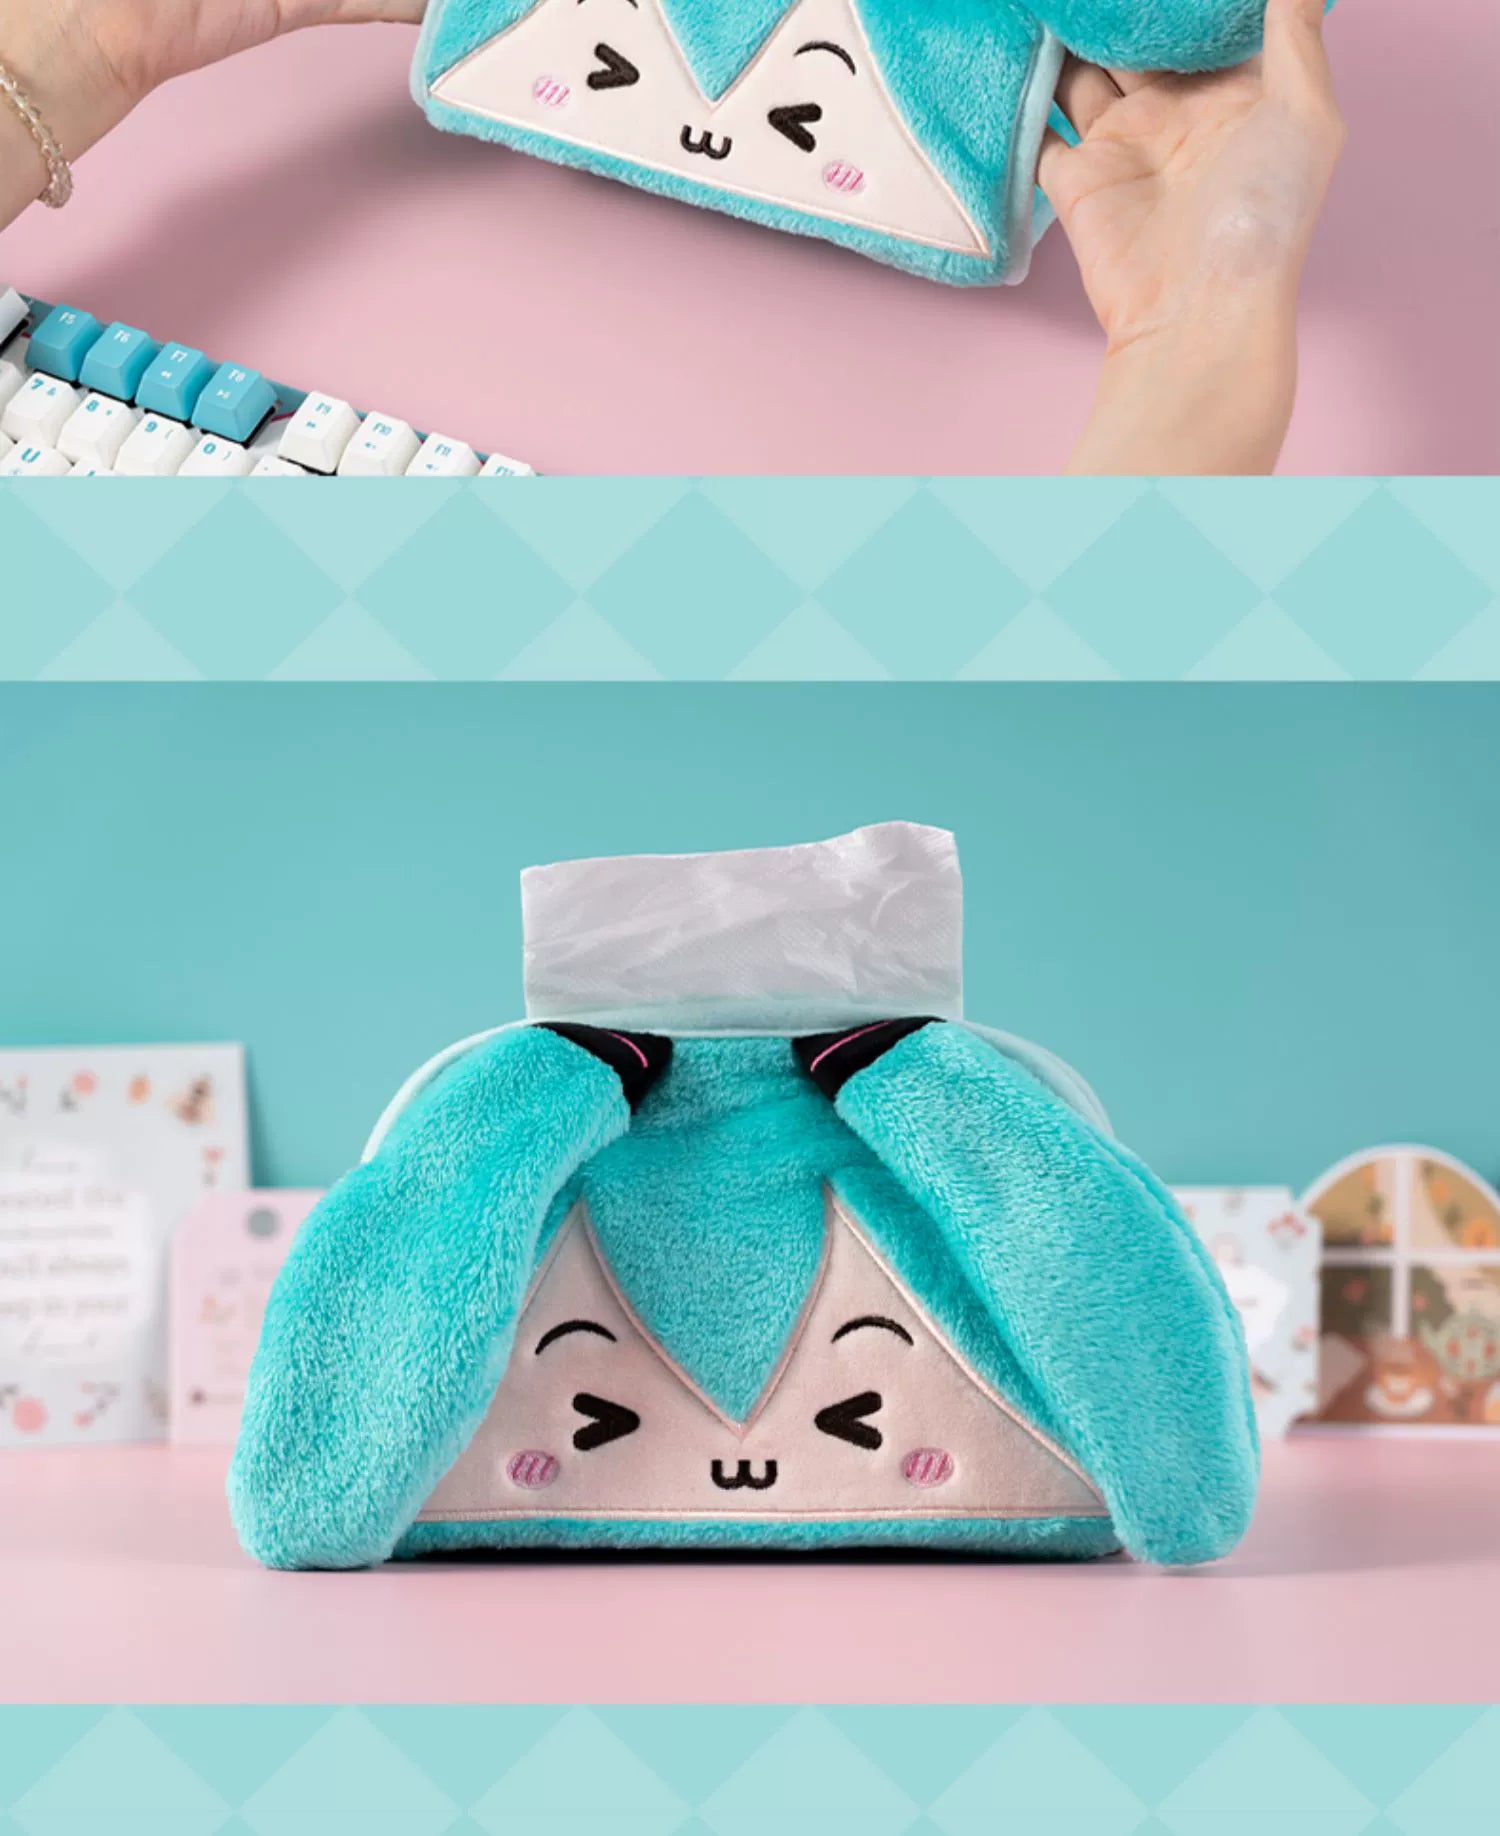 Moeyu Hatsune Miku Wink Tissue Box